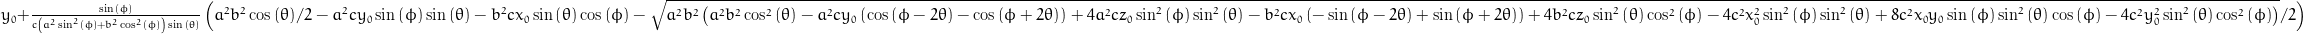 y_{0} + \frac{\sin{\left (\phi \right )}}{c \left(a^{2} \sin^{2}{\left (\phi \right )} + b^{2} \cos^{2}{\left (\phi \right )}\right) \sin{\left (\theta \right )}} \left(\frac{a^{2} b^{2}}{2} \cos{\left (\theta \right )} - a^{2} c y_{0} \sin{\left (\phi \right )} \sin{\left (\theta \right )} - b^{2} c x_{0} \sin{\left (\theta \right )} \cos{\left (\phi \right )} - \frac{1}{2} \sqrt{a^{2} b^{2} \left(a^{2} b^{2} \cos^{2}{\left (\theta \right )} - a^{2} c y_{0} \left(\cos{\left (\phi - 2 \theta \right )} - \cos{\left (\phi + 2 \theta \right )}\right) + 4 a^{2} c z_{0} \sin^{2}{\left (\phi \right )} \sin^{2}{\left (\theta \right )} - b^{2} c x_{0} \left(- \sin{\left (\phi - 2 \theta \right )} + \sin{\left (\phi + 2 \theta \right )}\right) + 4 b^{2} c z_{0} \sin^{2}{\left (\theta \right )} \cos^{2}{\left (\phi \right )} - 4 c^{2} x_{0}^{2} \sin^{2}{\left (\phi \right )} \sin^{2}{\left (\theta \right )} + 8 c^{2} x_{0} y_{0} \sin{\left (\phi \right )} \sin^{2}{\left (\theta \right )} \cos{\left (\phi \right )} - 4 c^{2} y_{0}^{2} \sin^{2}{\left (\theta \right )} \cos^{2}{\left (\phi \right )}\right)}\right)